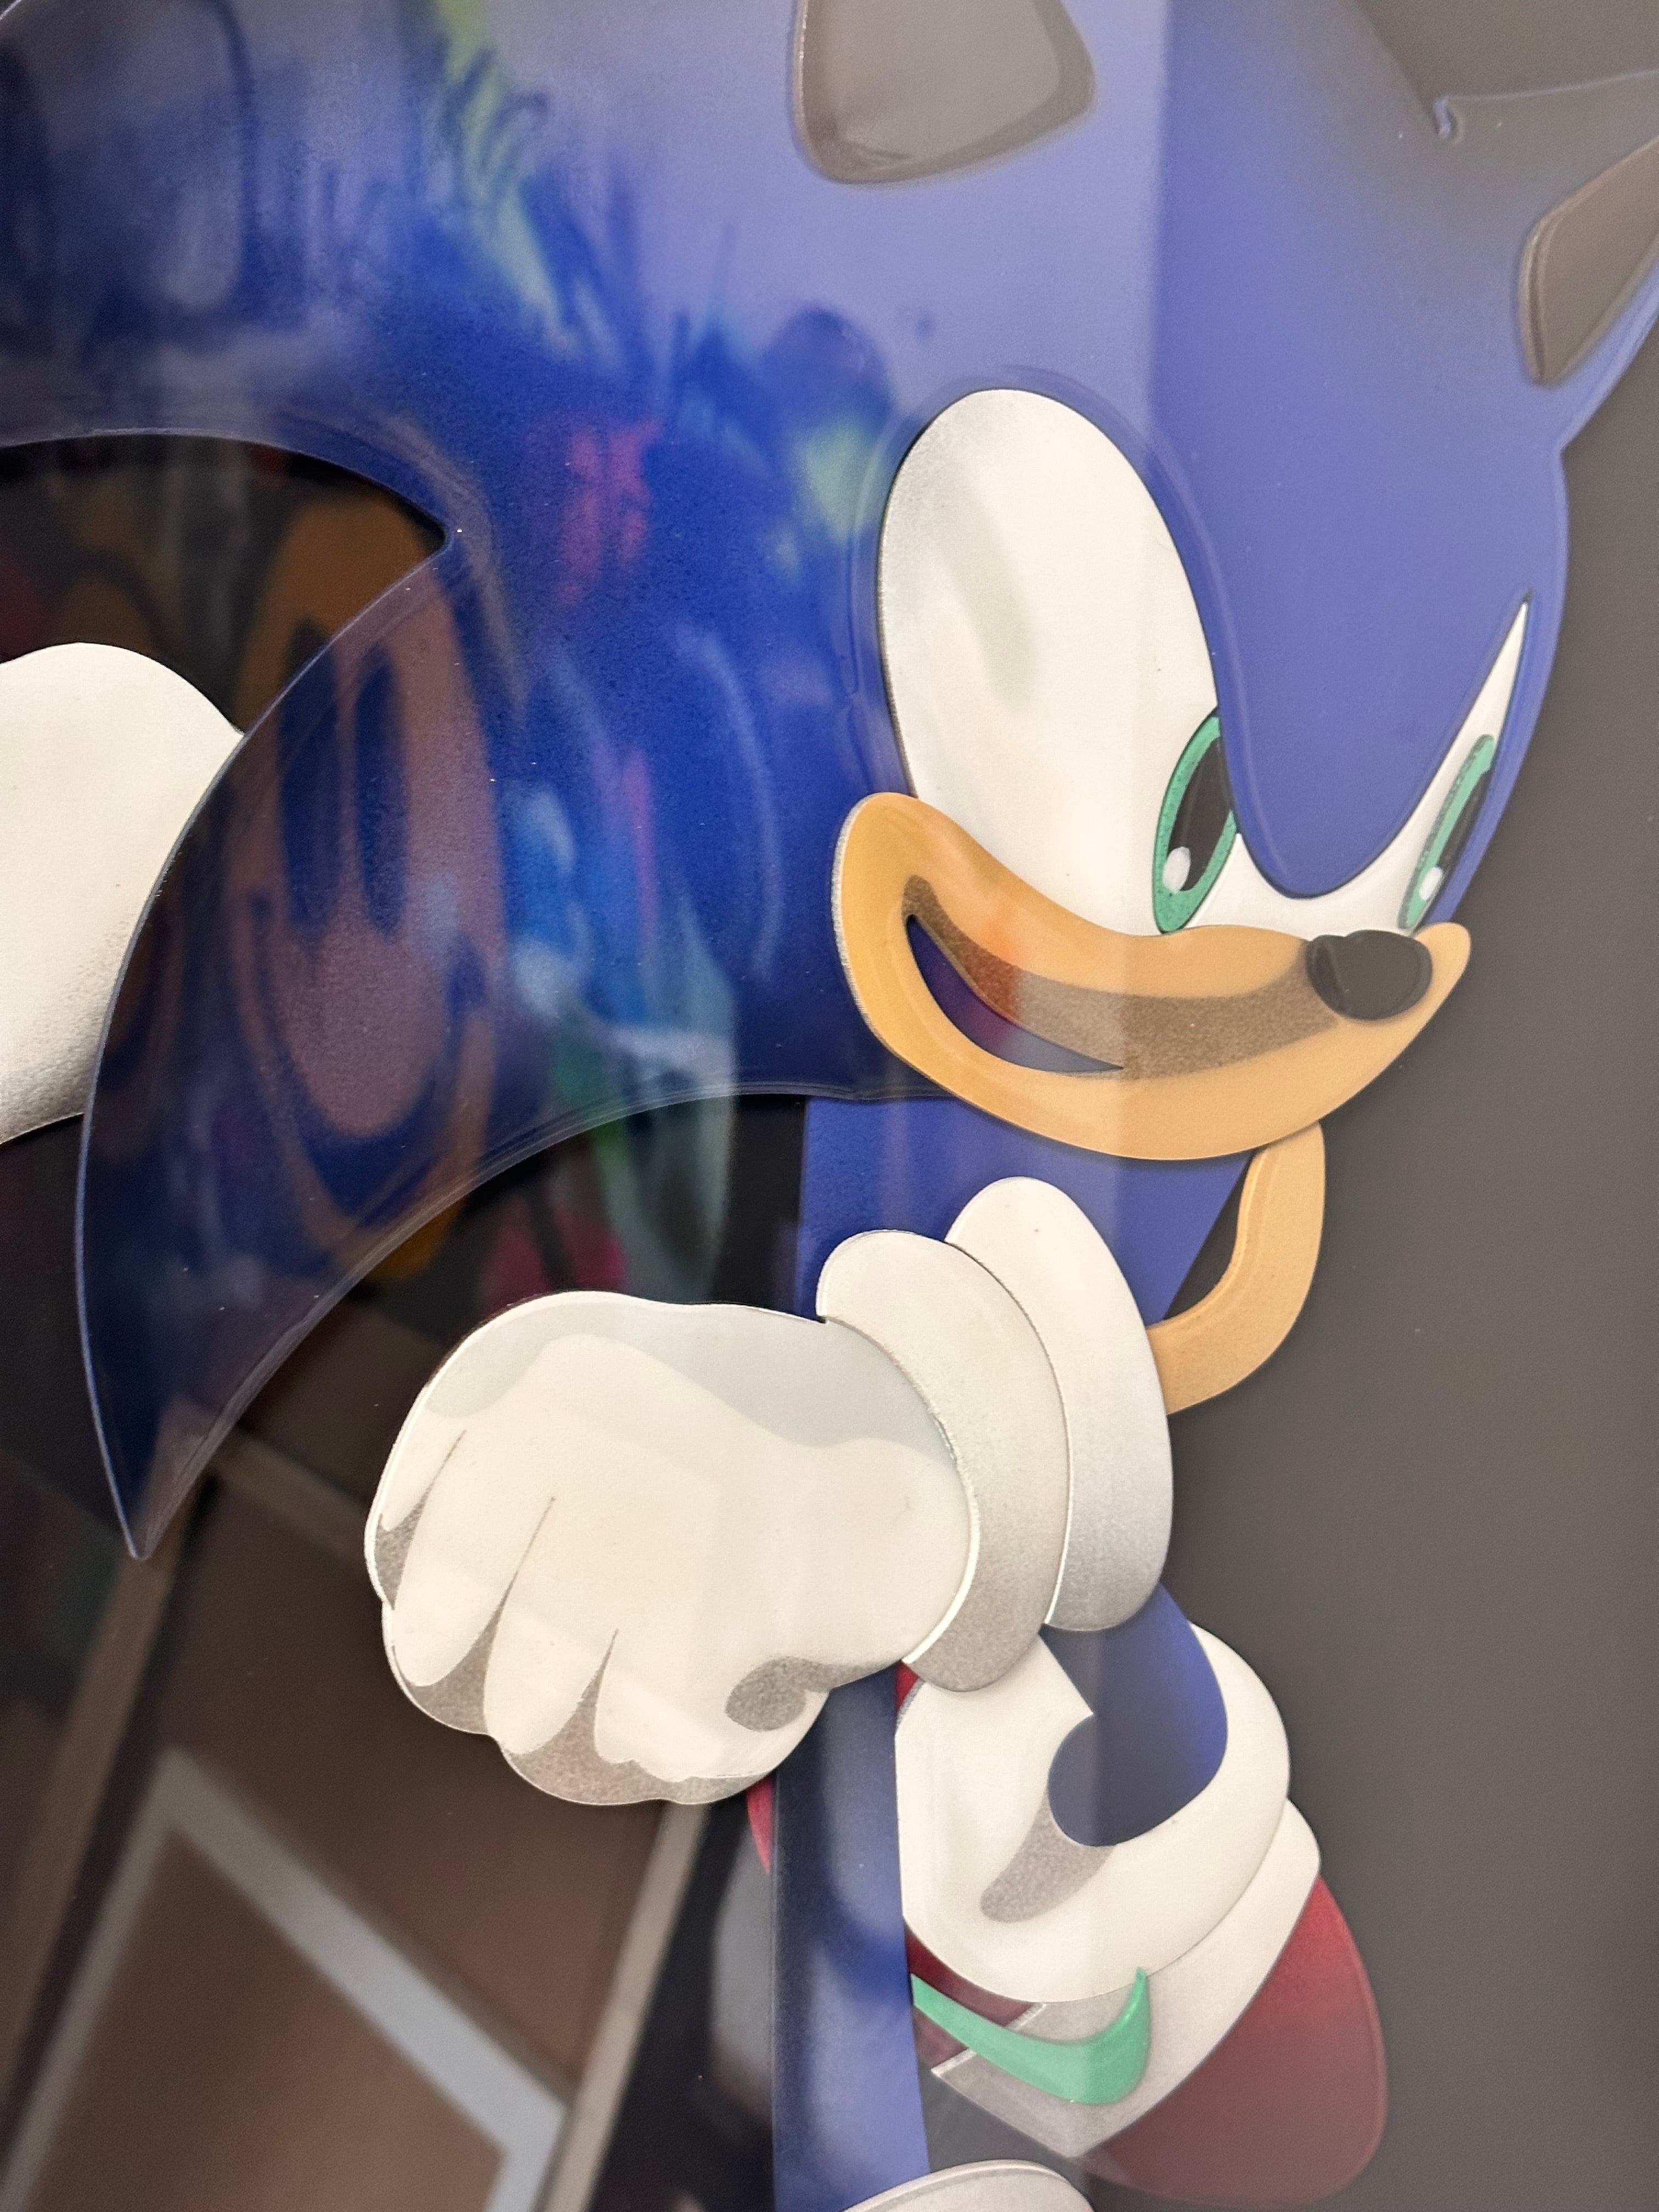 Sonic swoosh deepest black edition